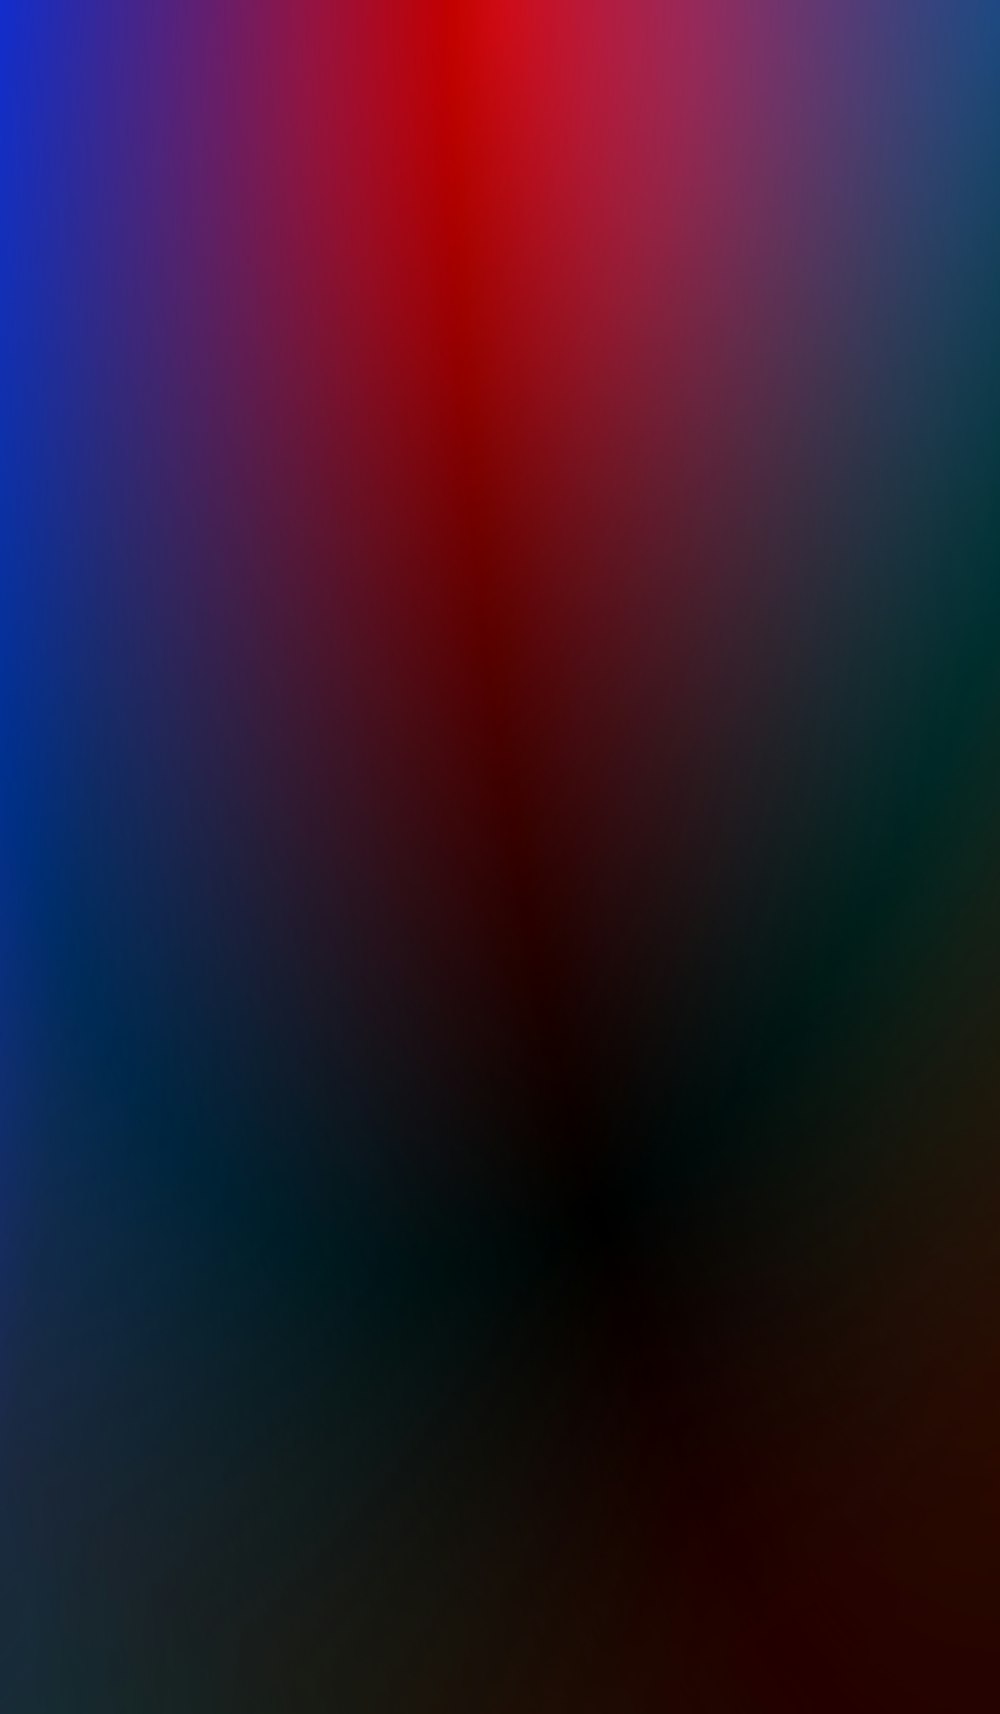 red light on blue background photo – Free Art Image on Unsplash